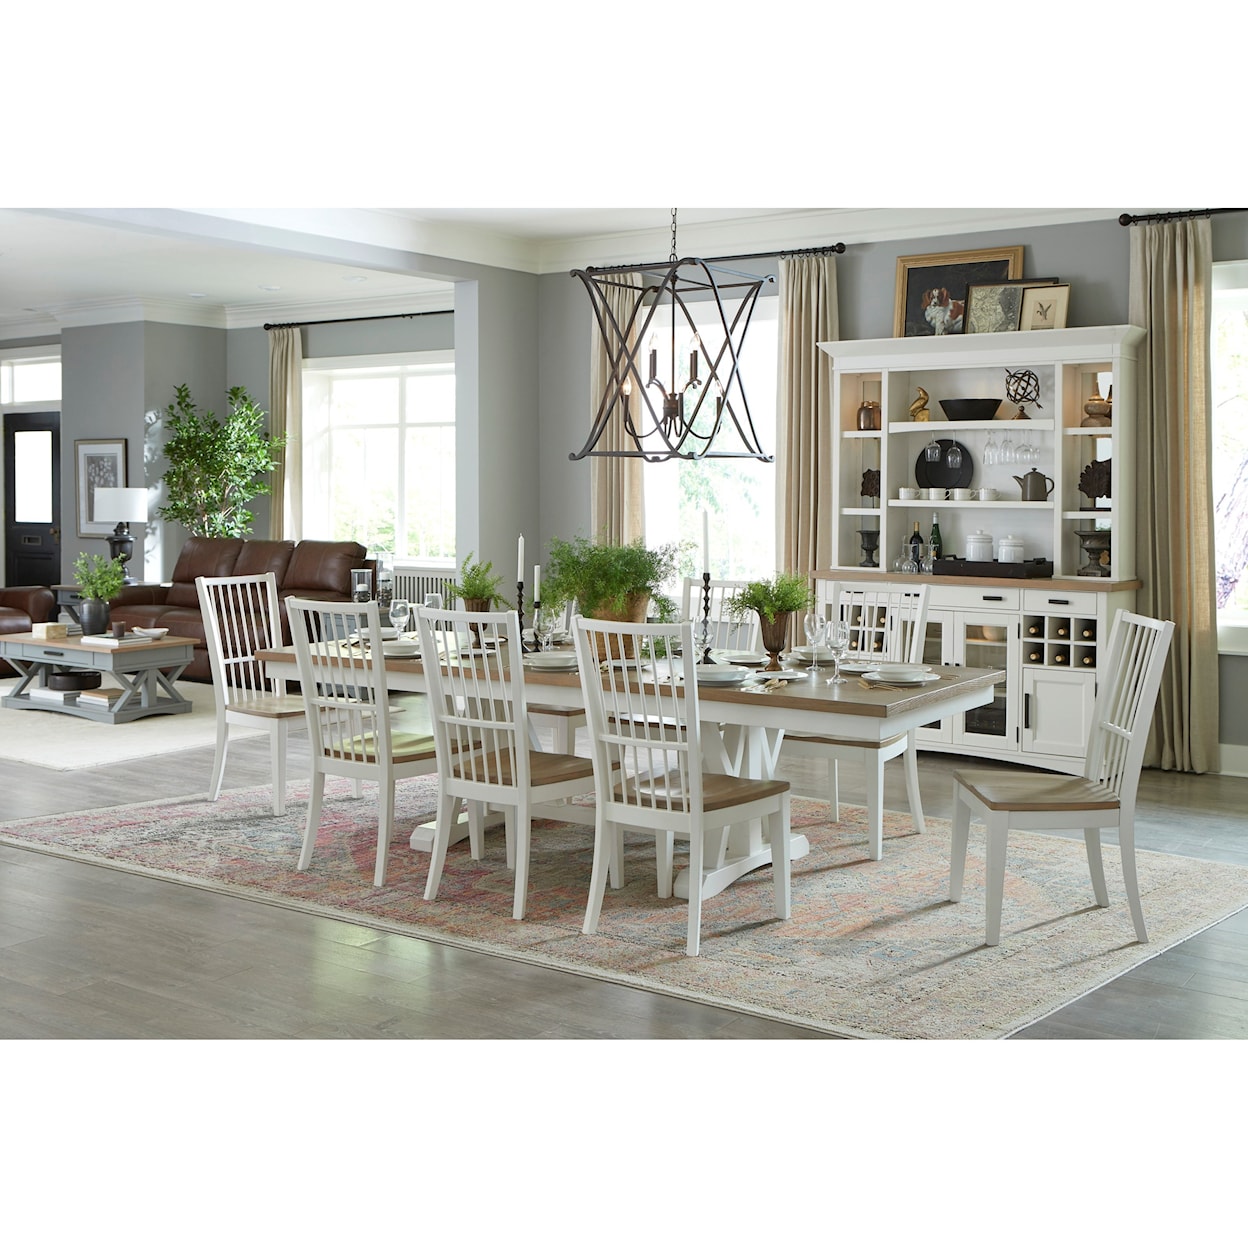 Paramount Furniture Americana Modern Formal Dining Room Group